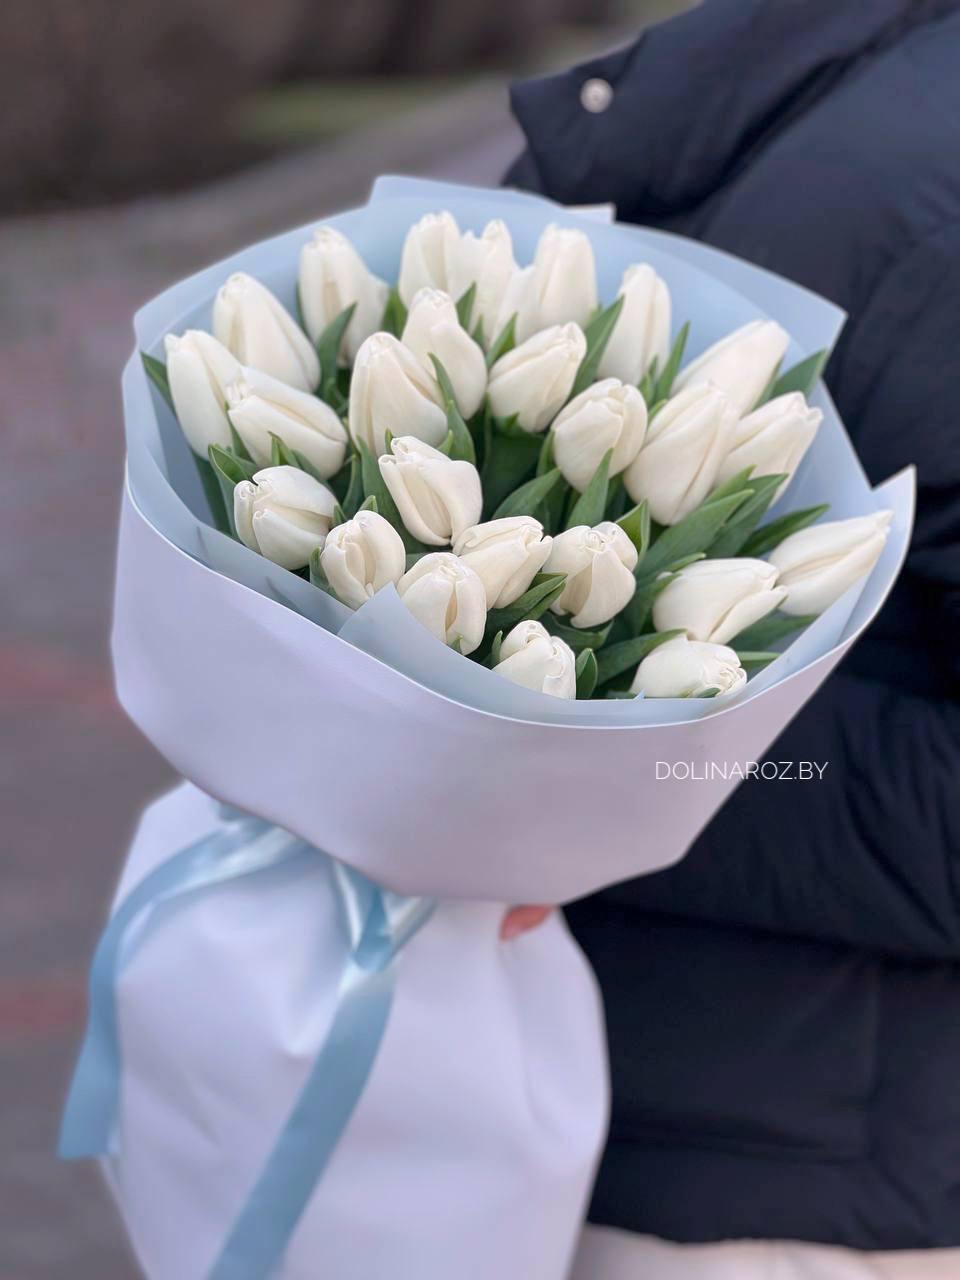 Bouquet of tulips "White marshmallow"